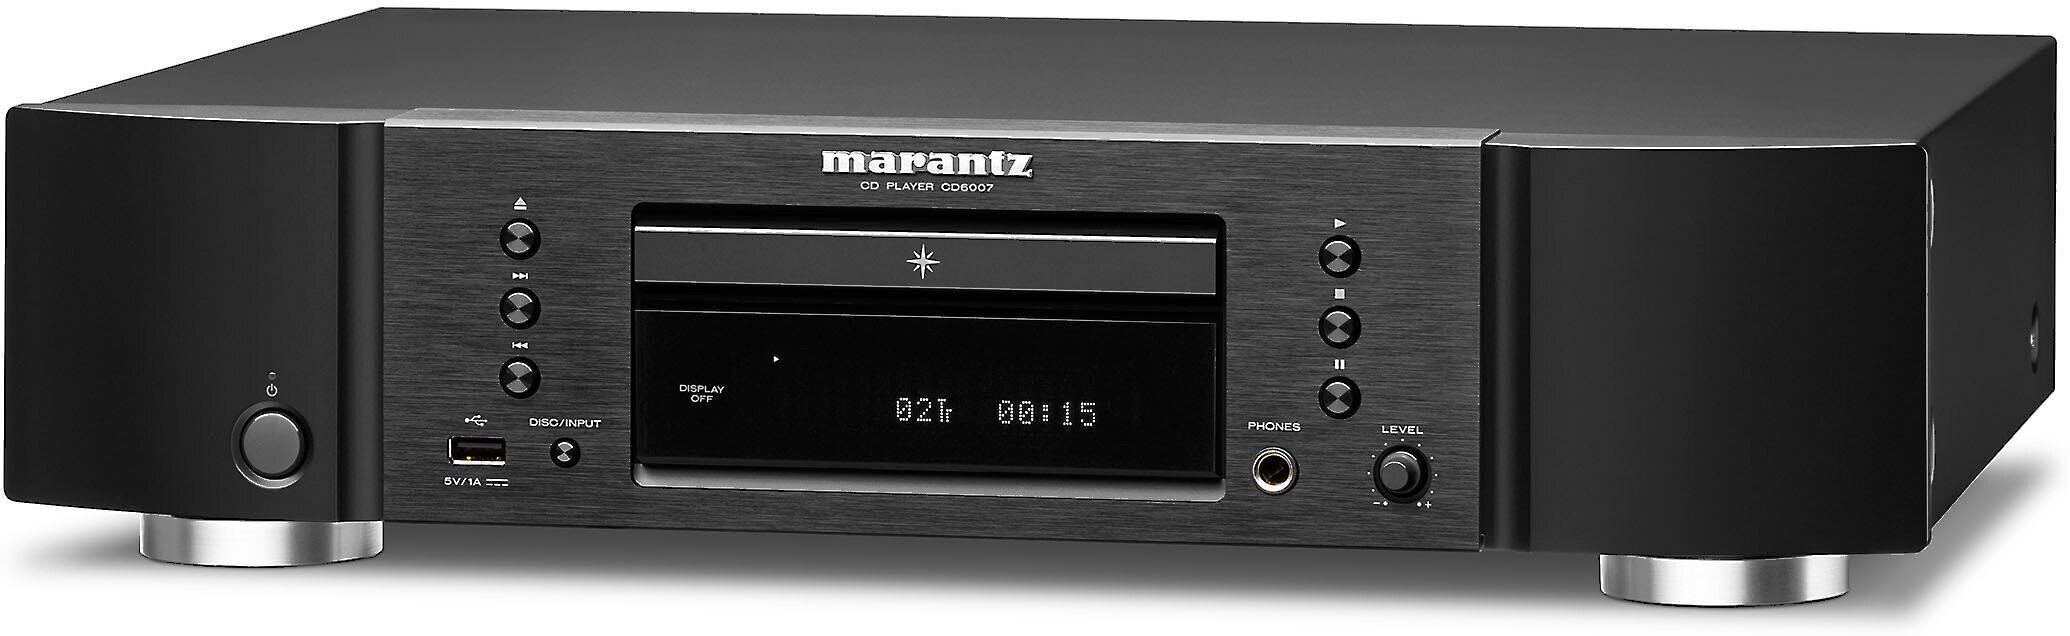 Customer Reviews: Marantz CD6007 Single-disc CD player with USB port for thumb drives Crutchfield